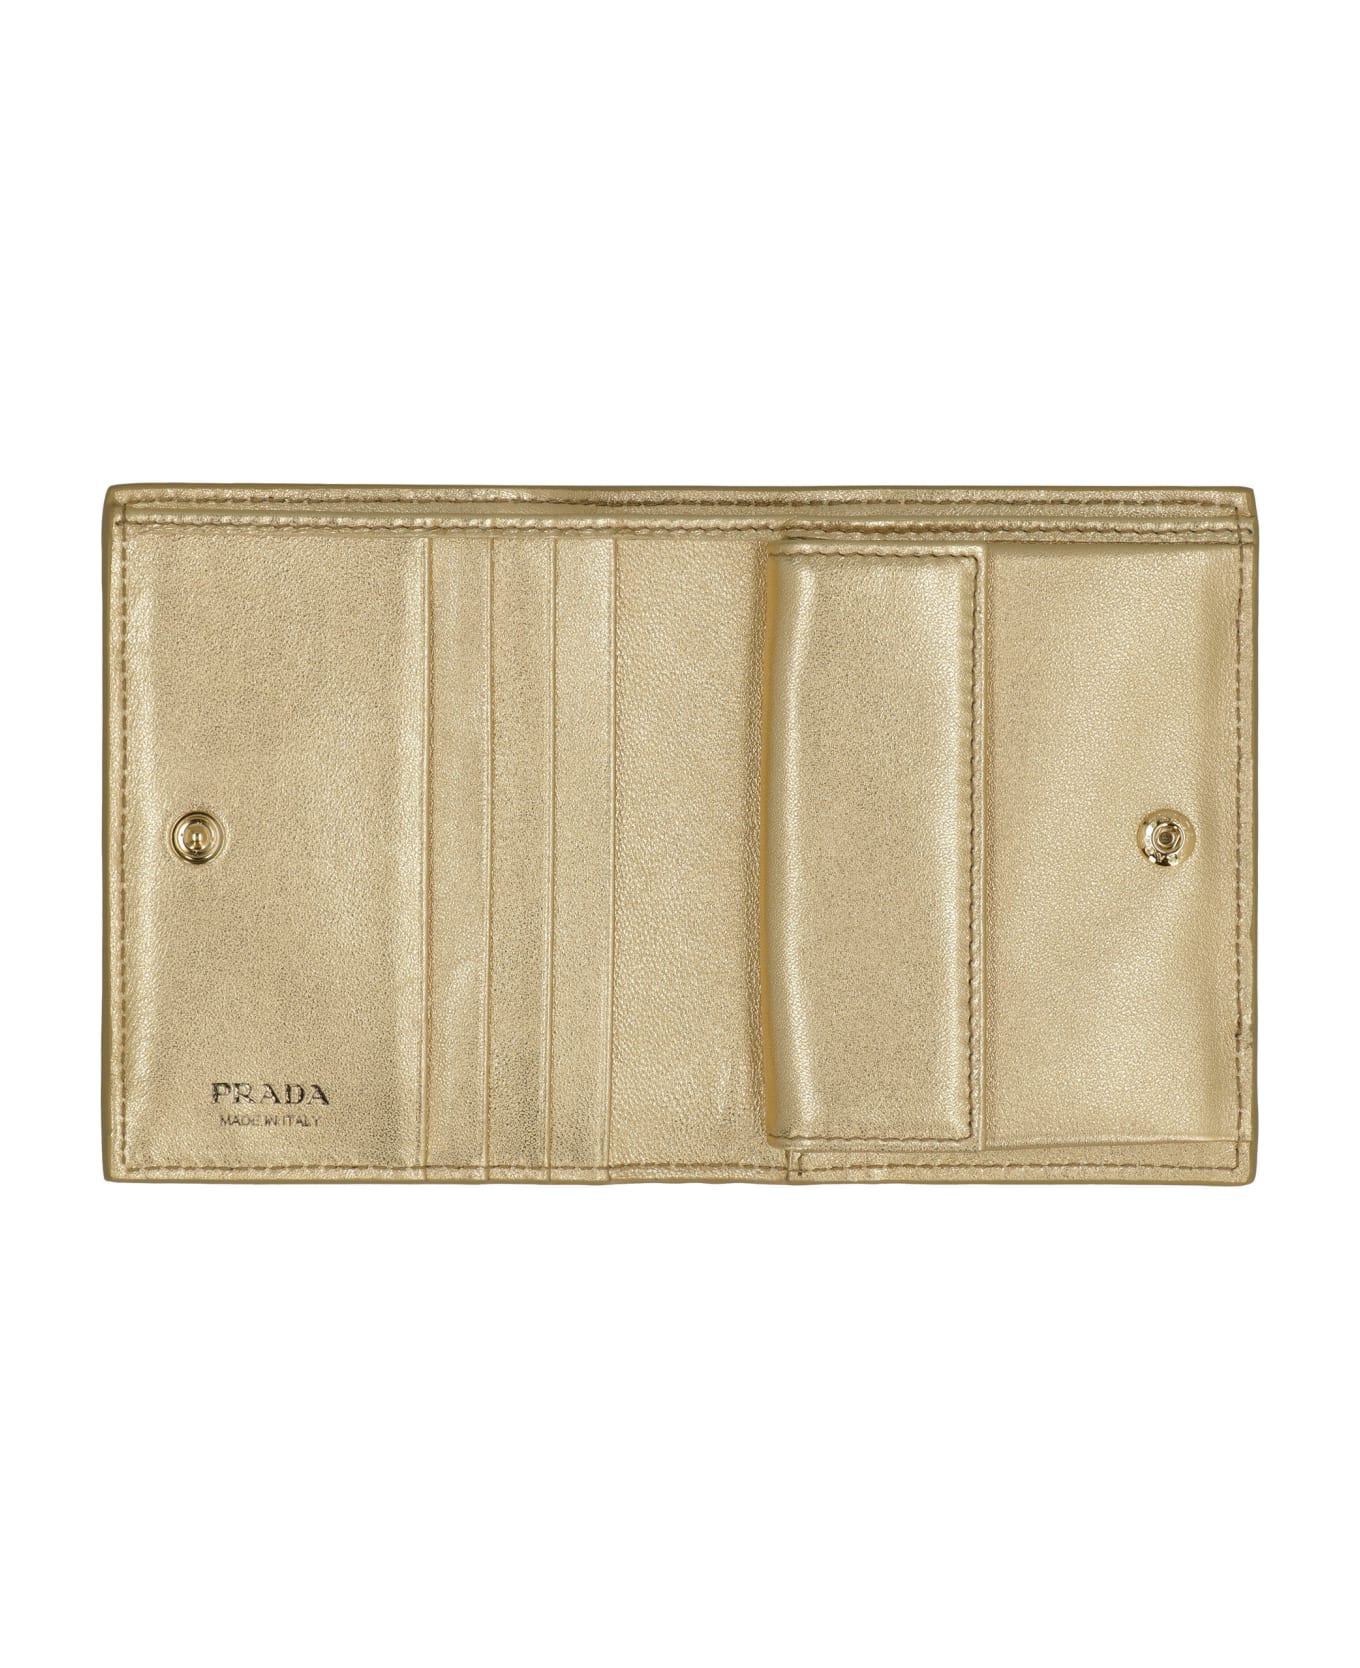 Prada Metallic Leather Wallet - Gold 財布